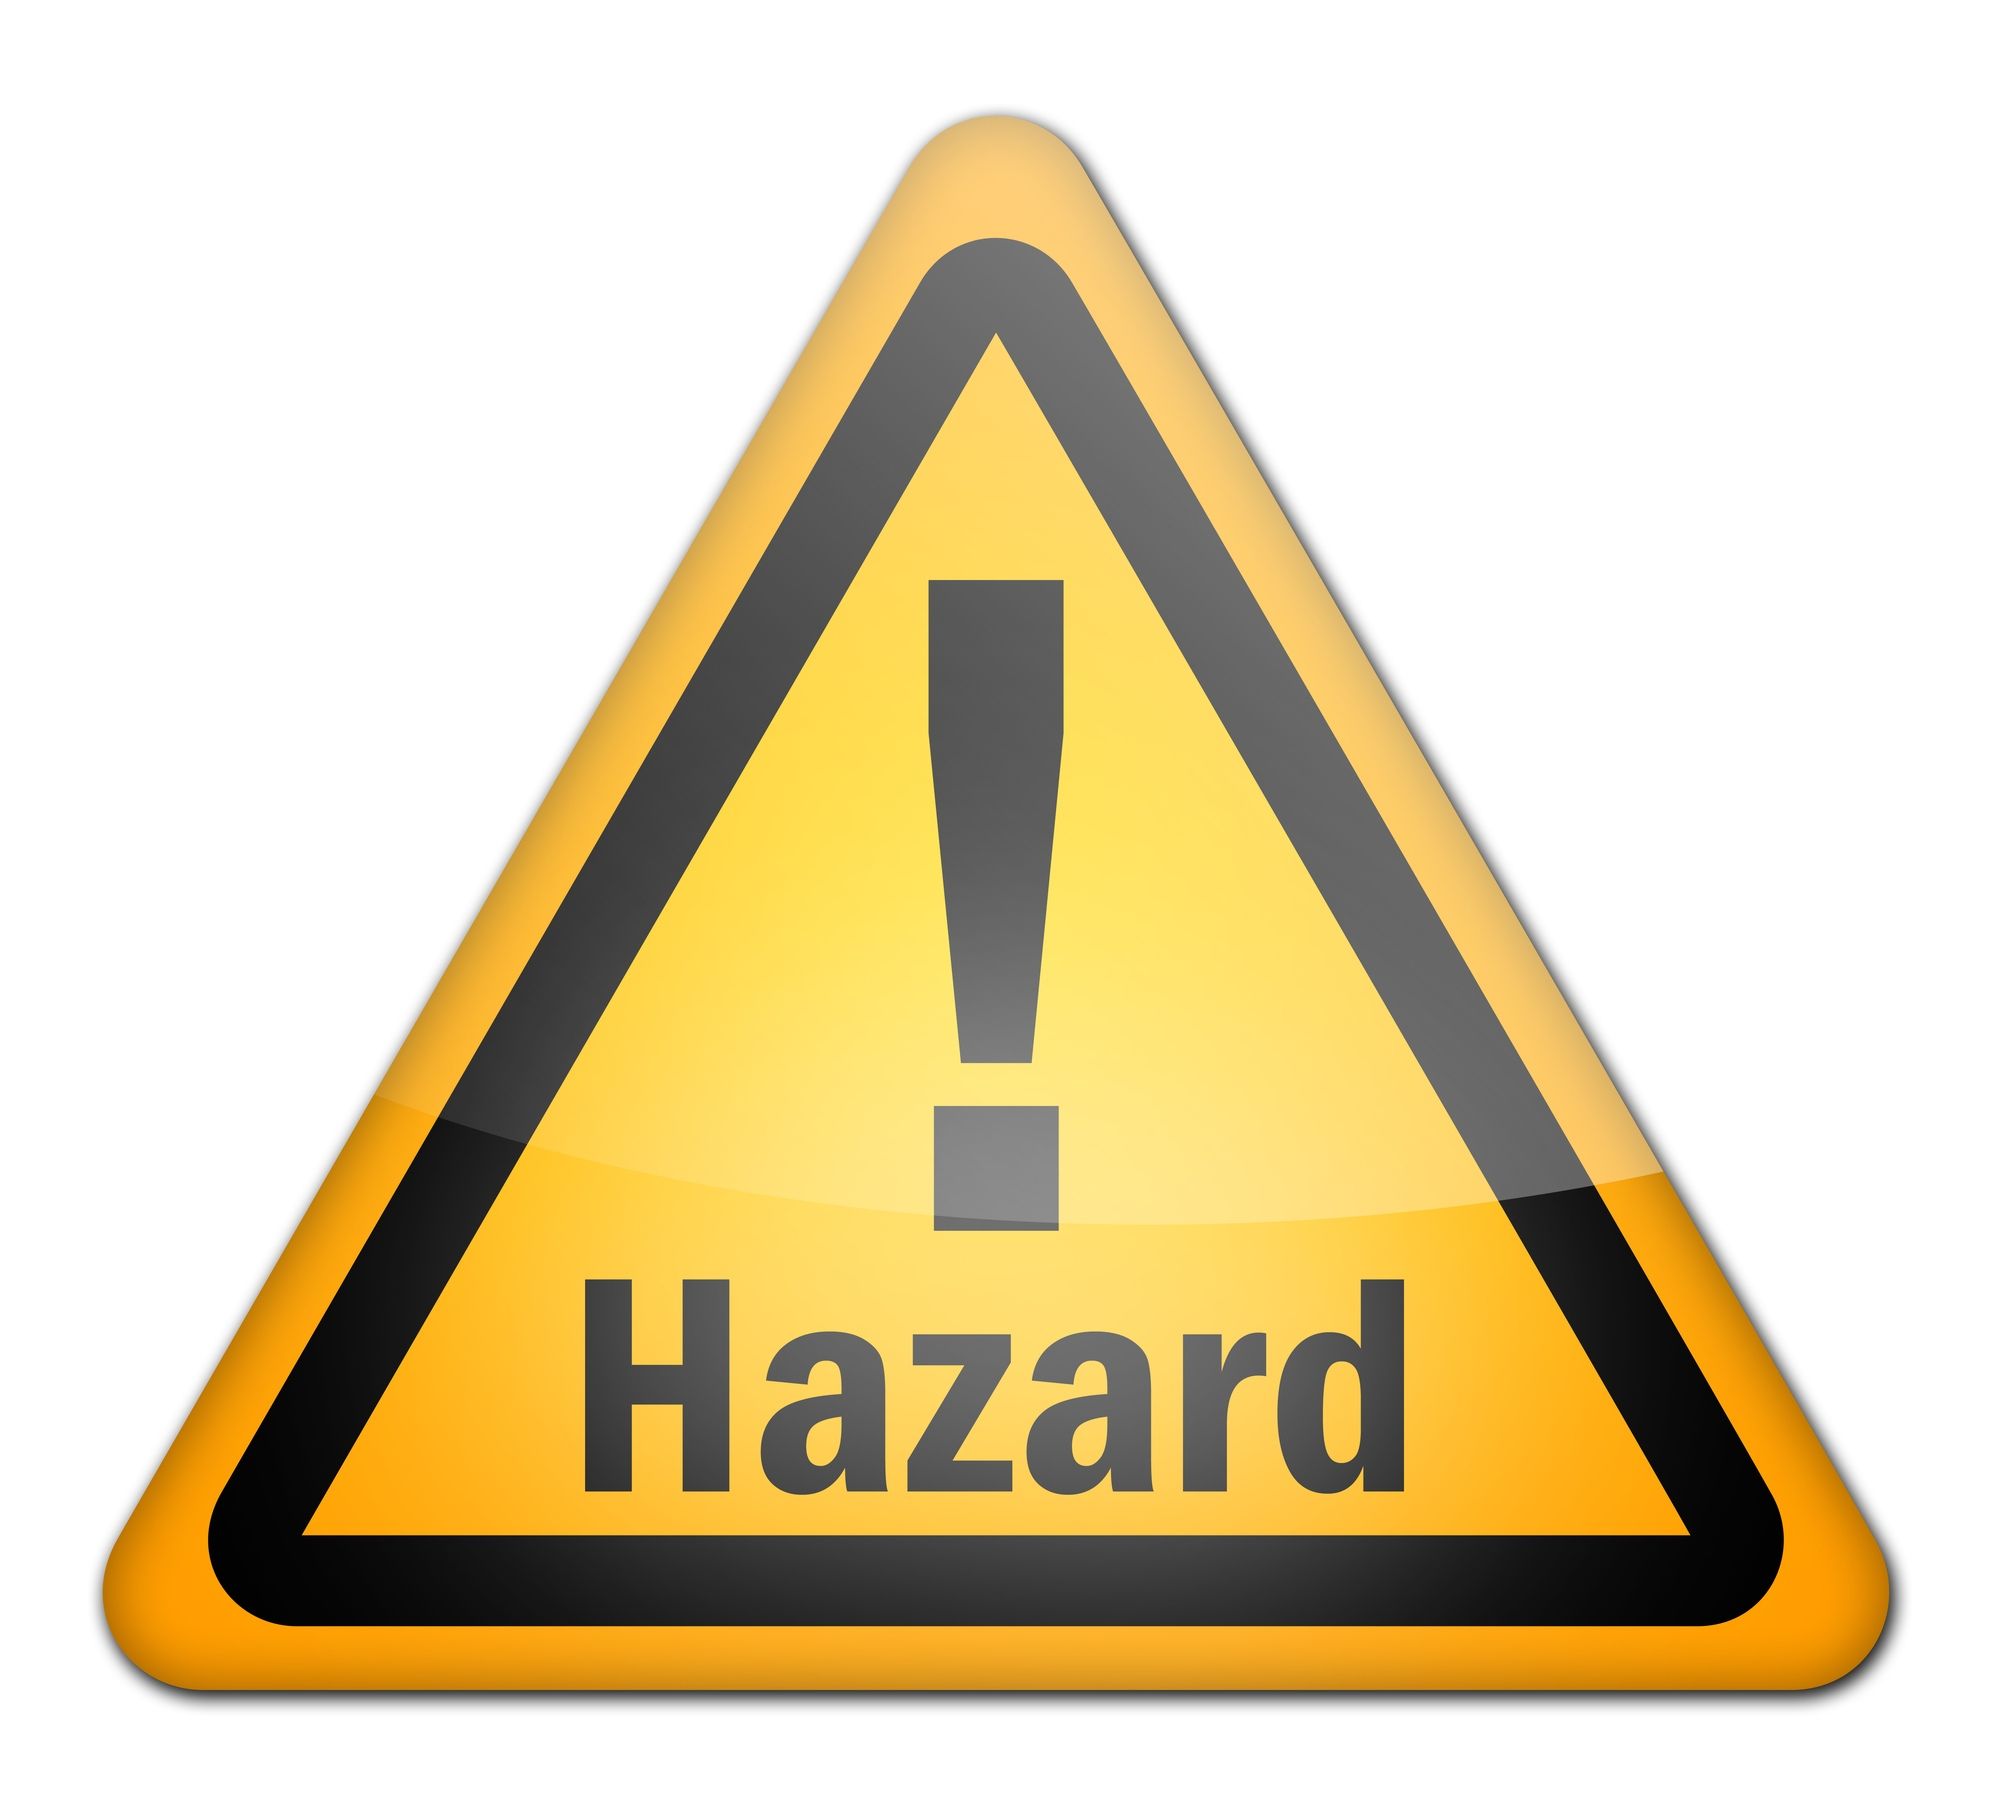 Hazard sign regarding the hazardous products recalled by Health Canada